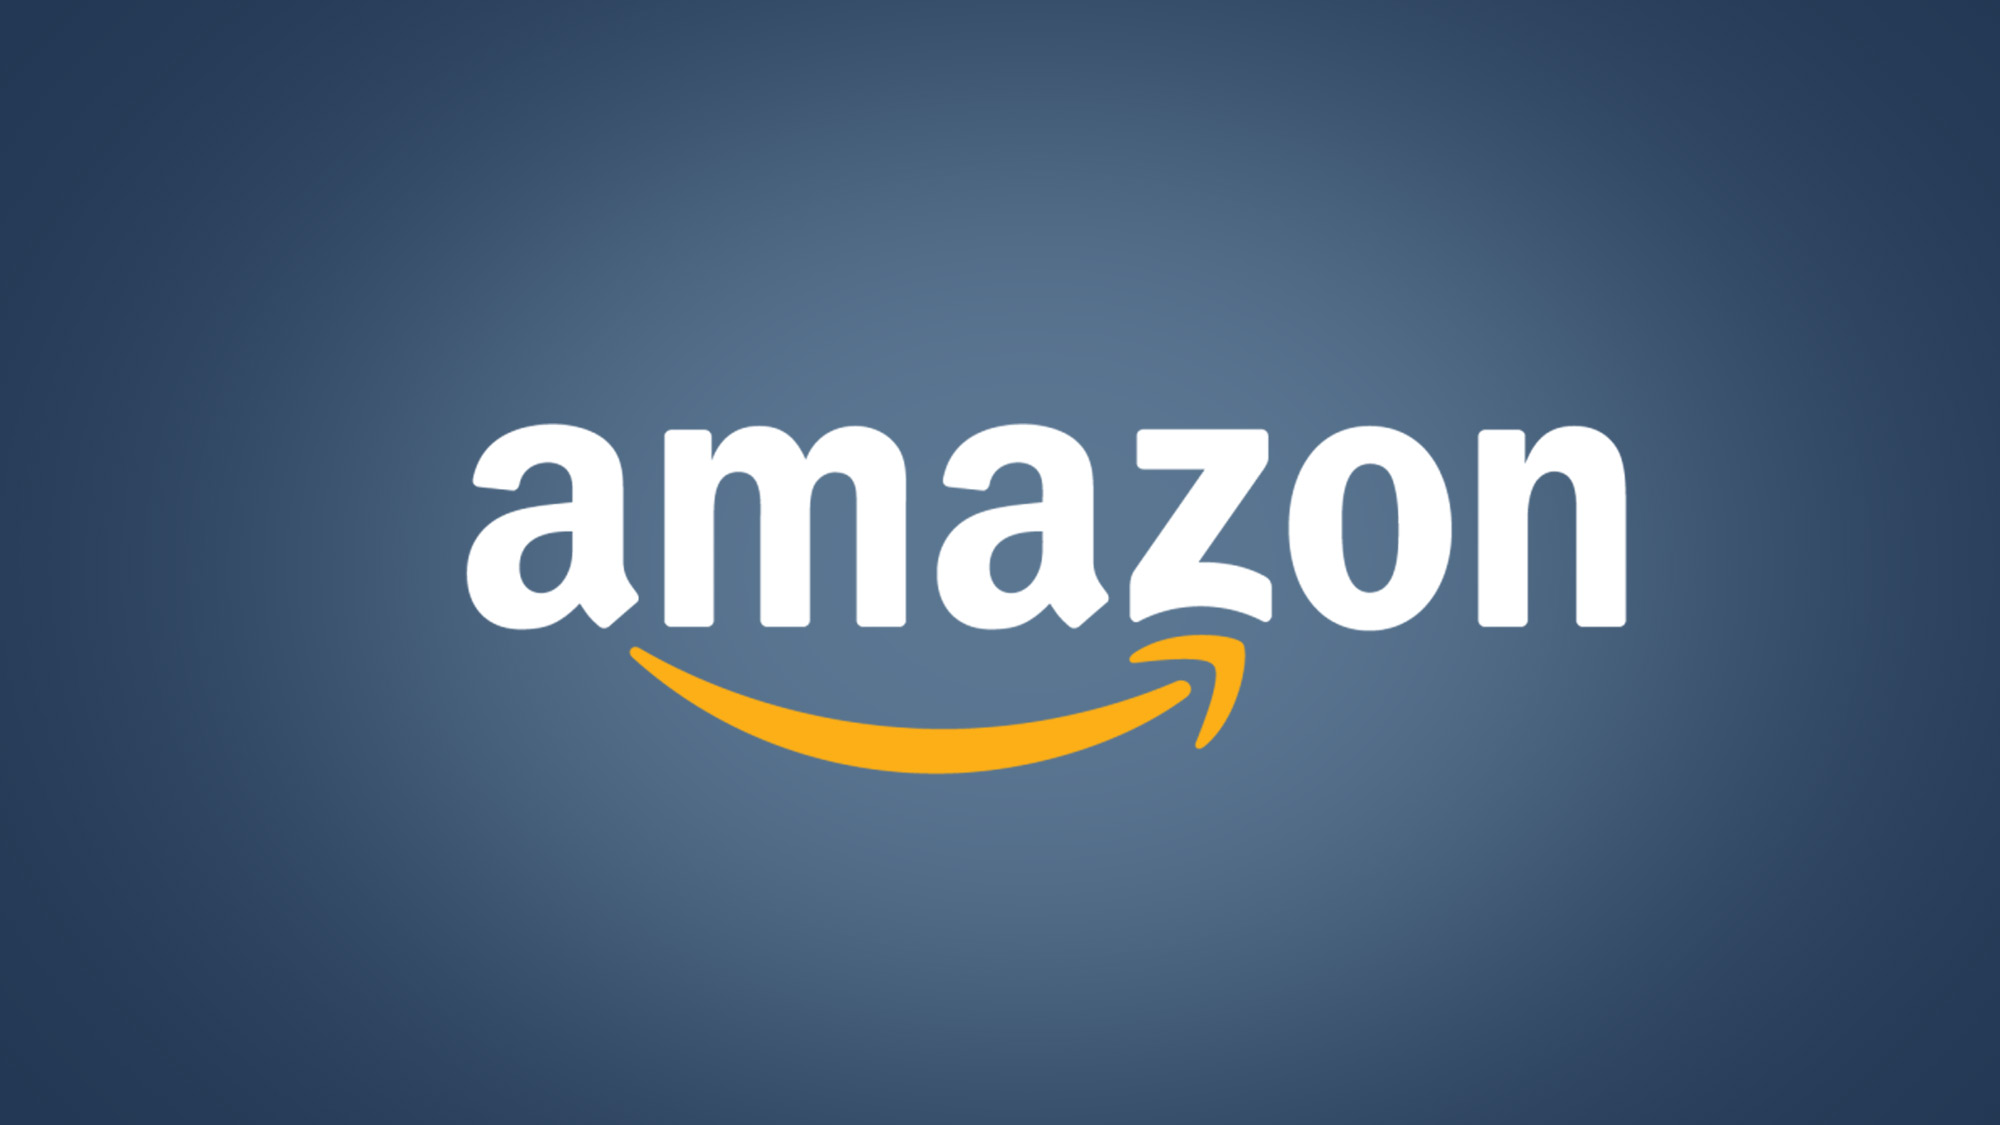 Introducing Amazon 4-star